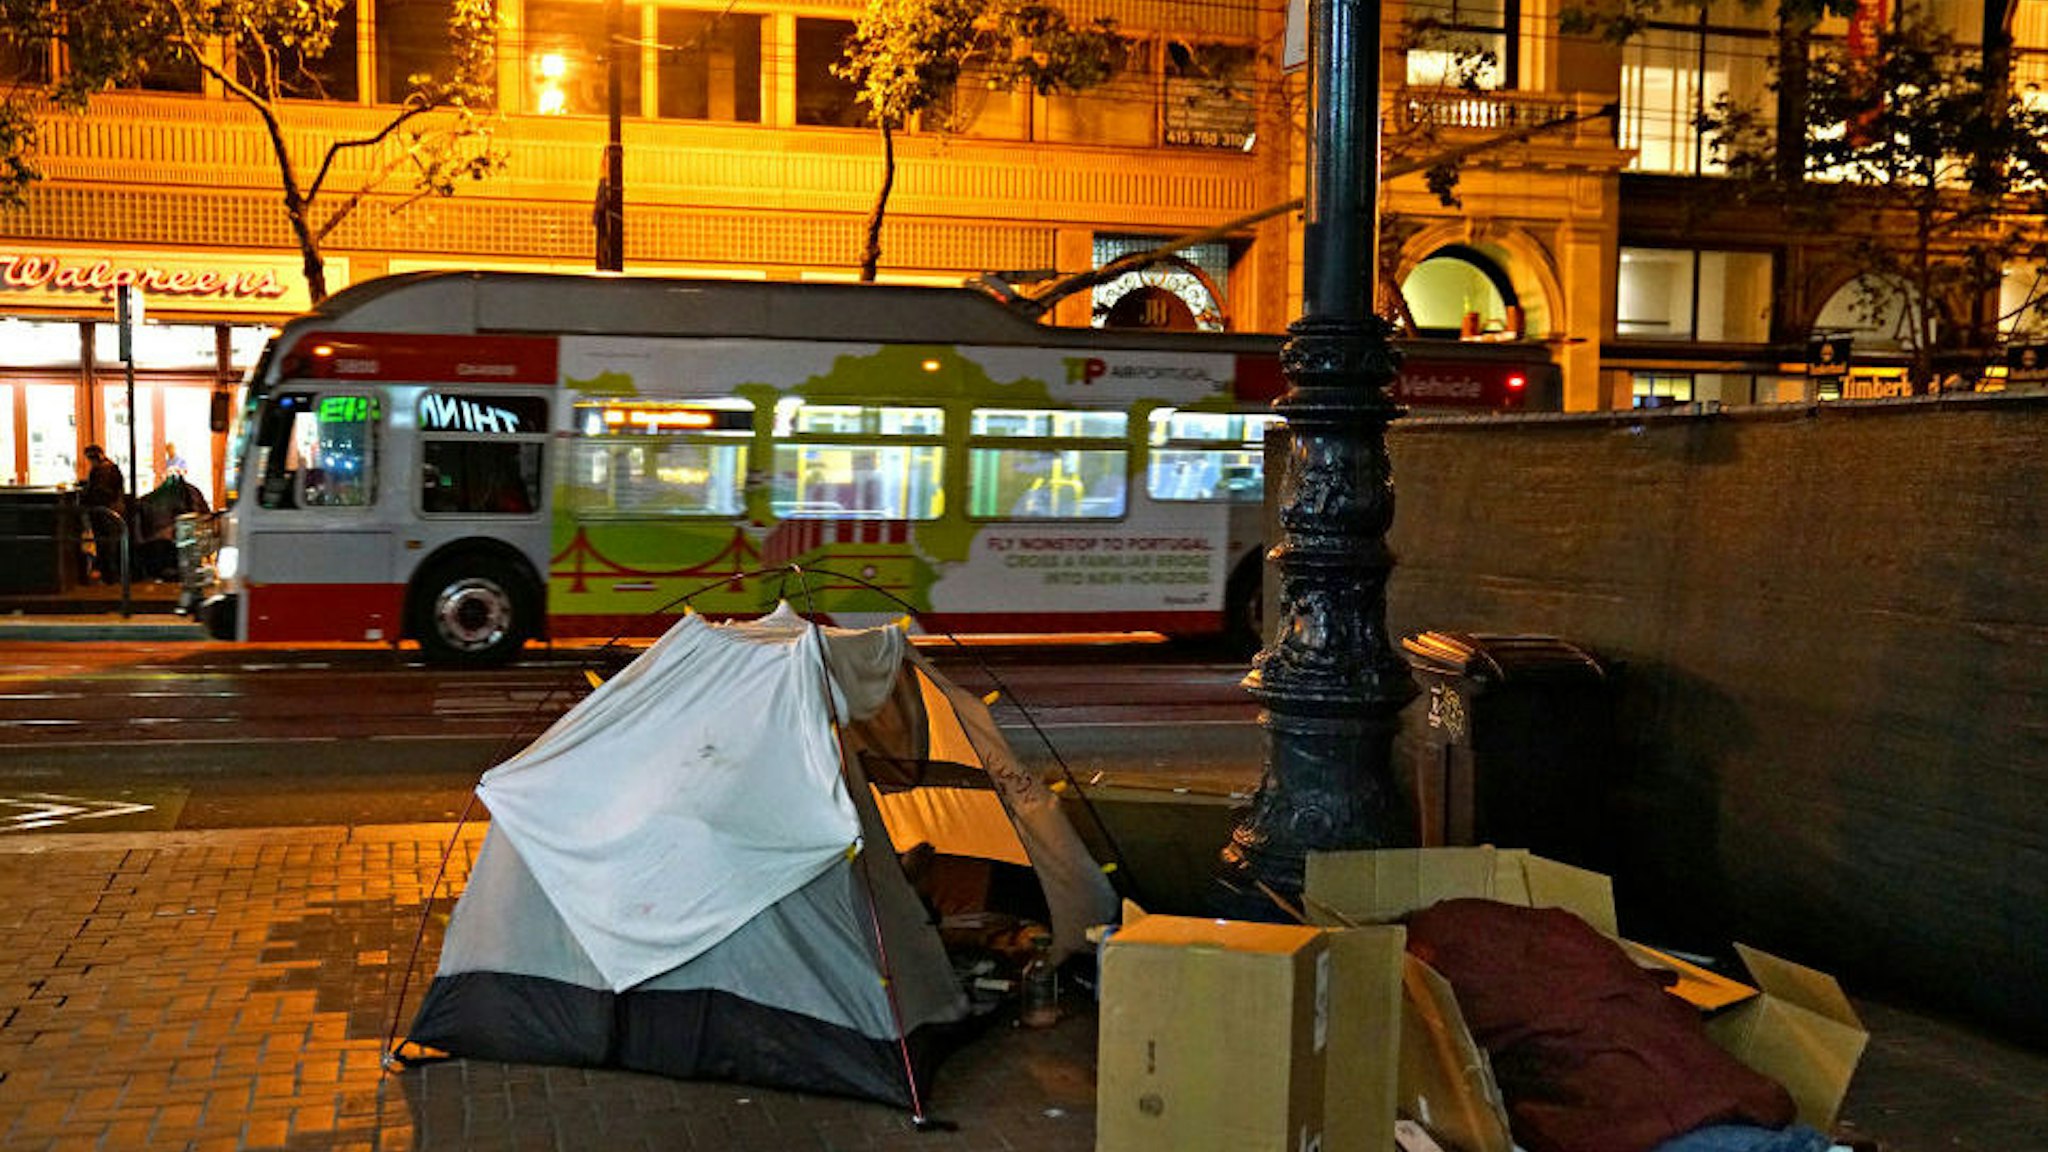 (12:18 a.m.) A tent is set up in the 800 block of Market St. in San Francisco, on Wednesday, June 19, 2019.